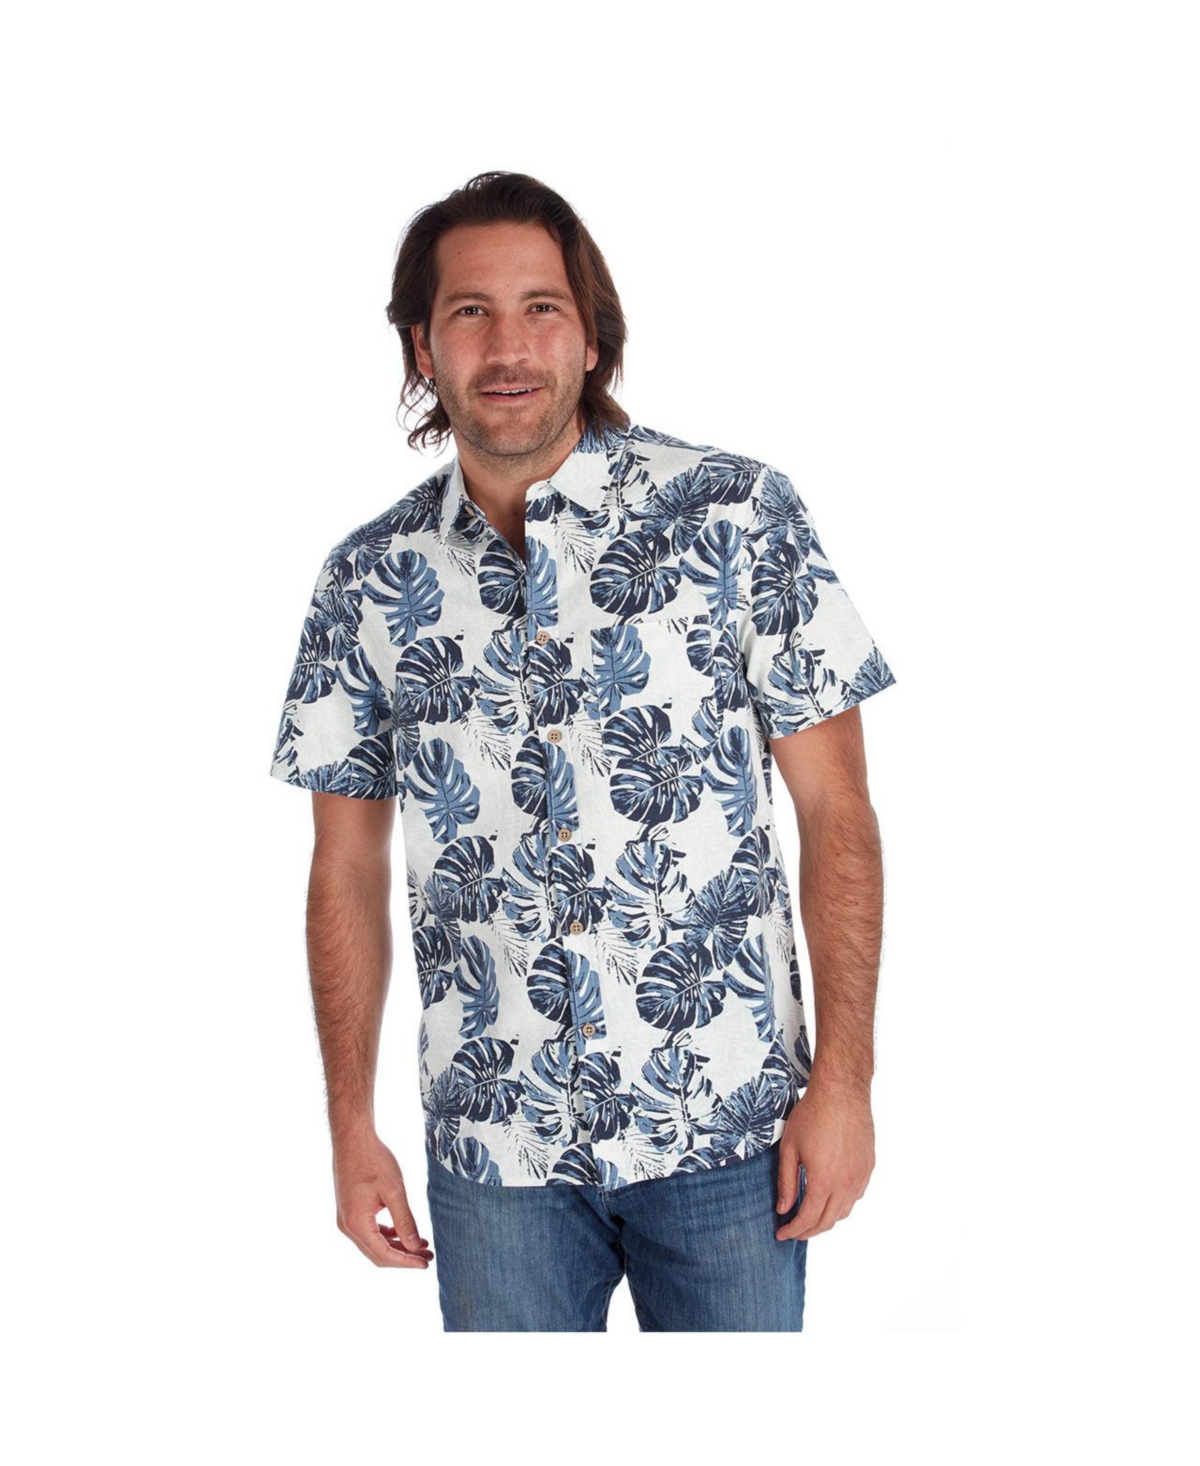 Clothing Men's Short Sleeve Floral Shirt - Navy